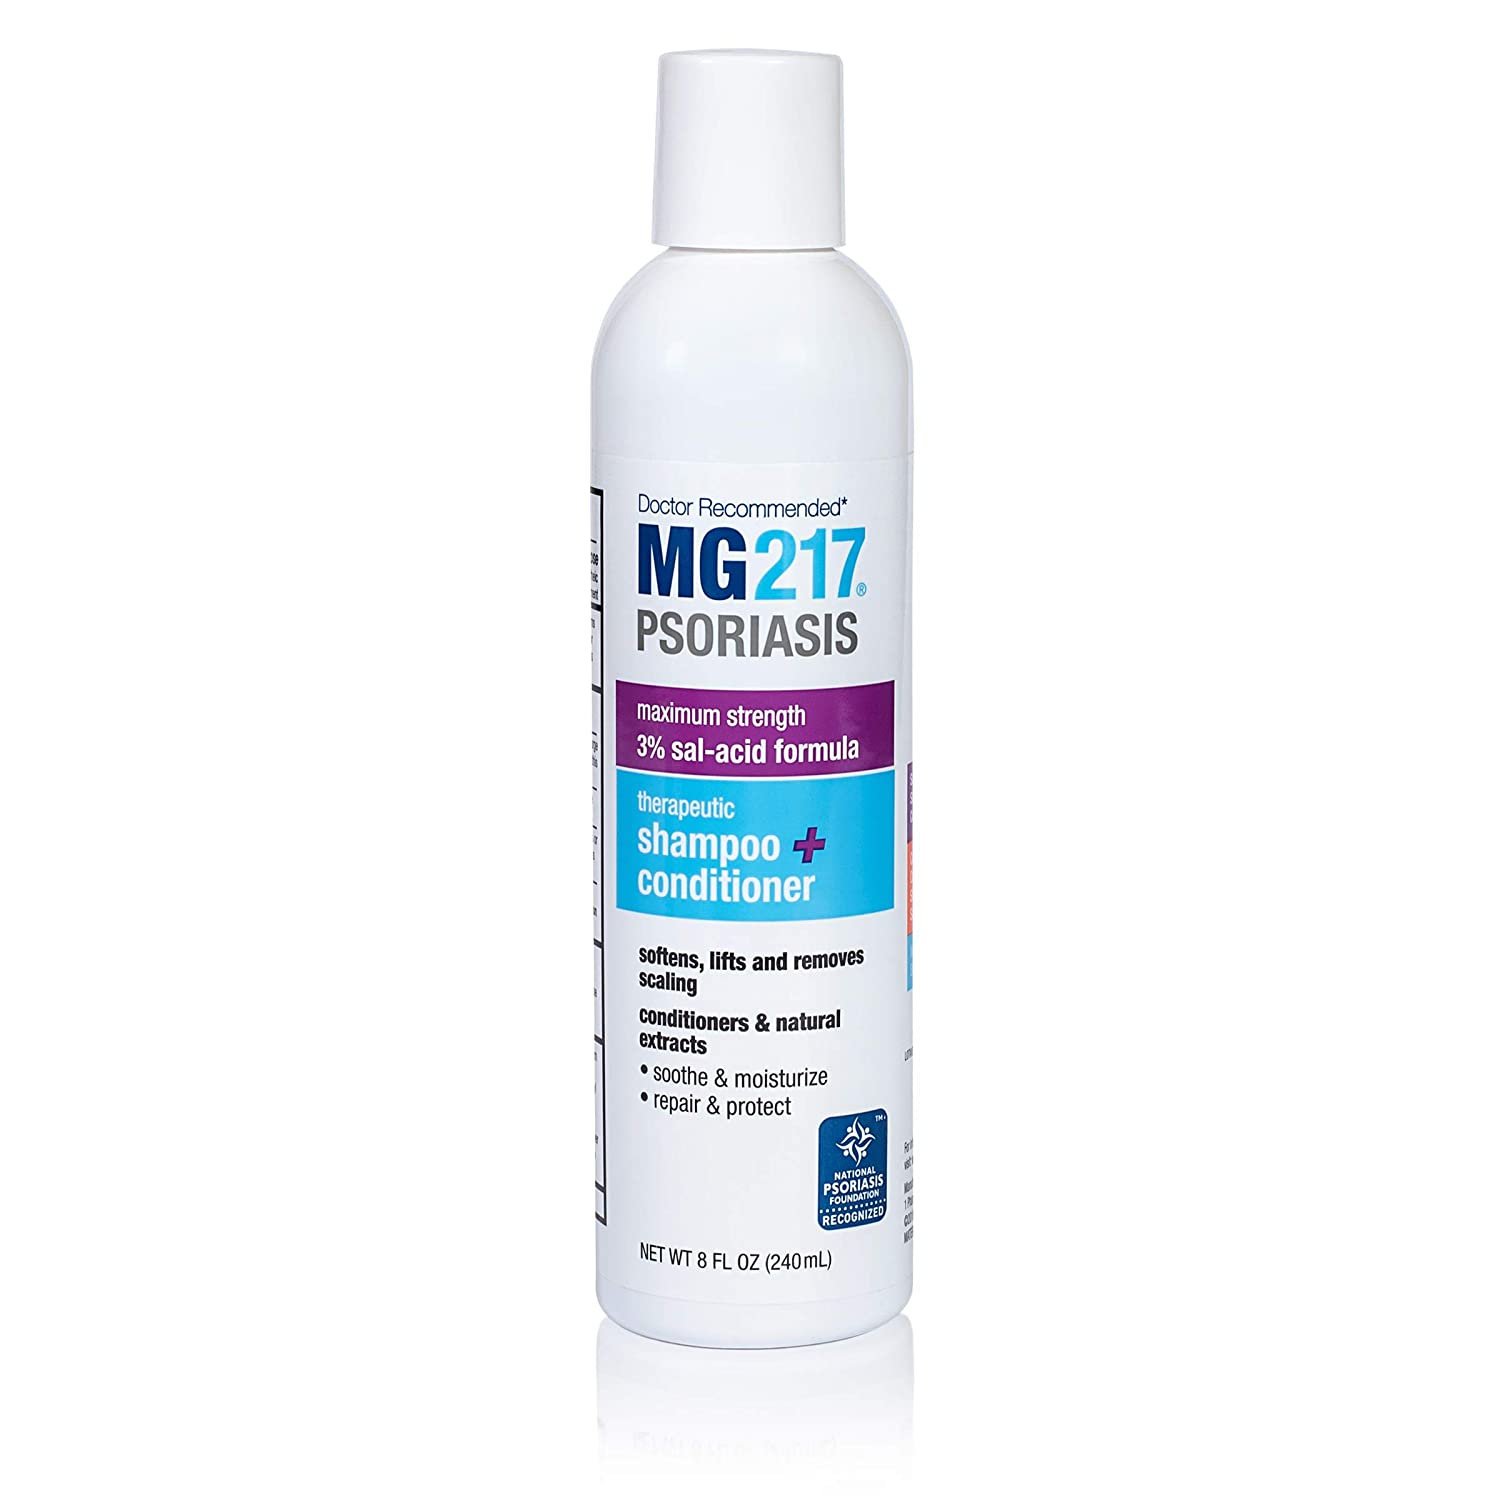 MG217 Psoriasis Scalp Solutions, Shampoo + Conditioner with Maximum Strength 3% Salicylic Acid - 8 Oz (240ml)